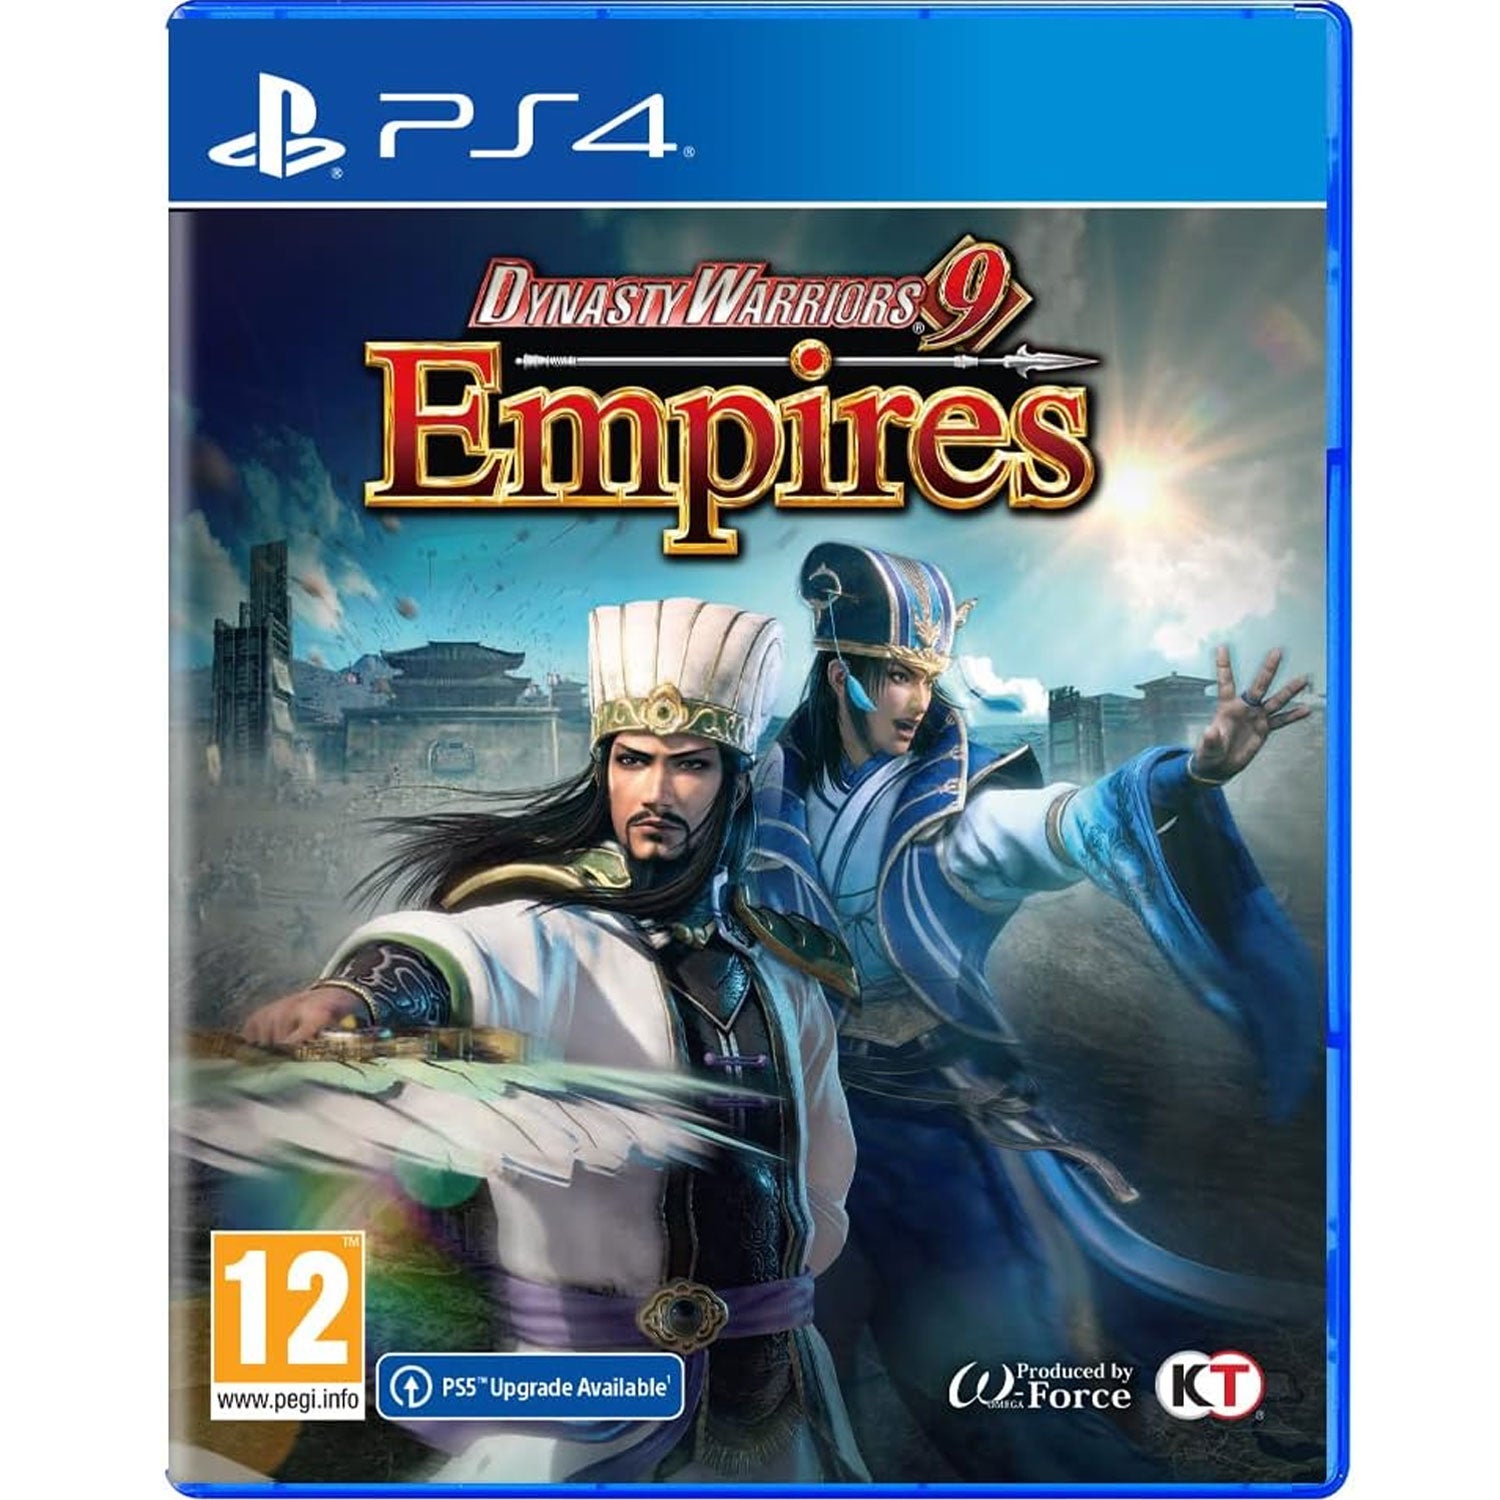 PS4 Dynasty Warriors 9 Empires